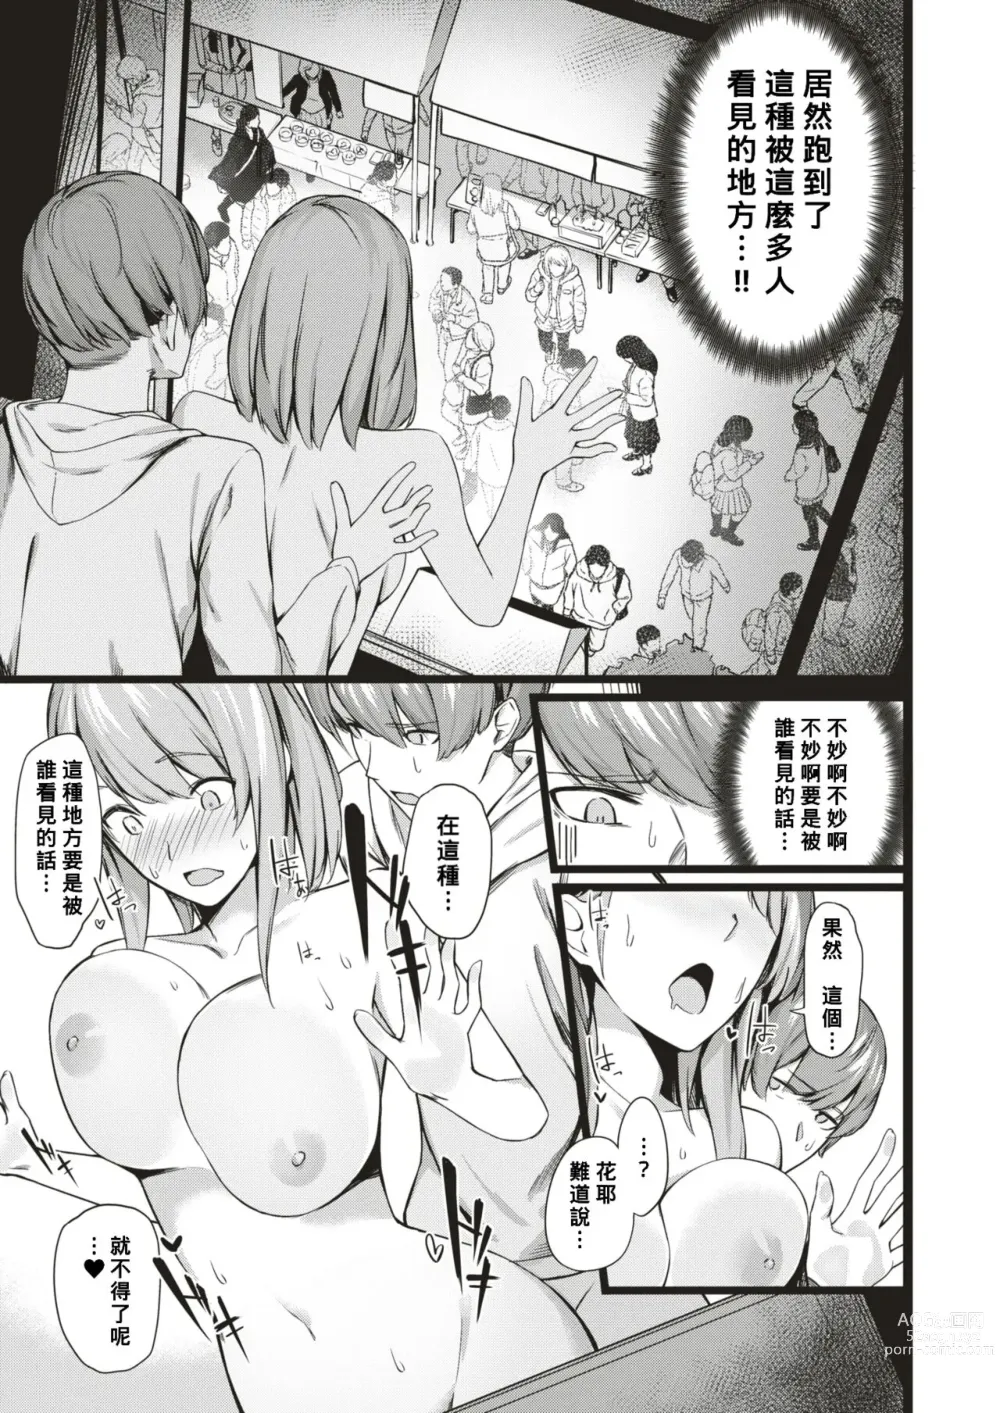 Page 13 of manga Koukai Kakurenbo - What is inside the secret hole?